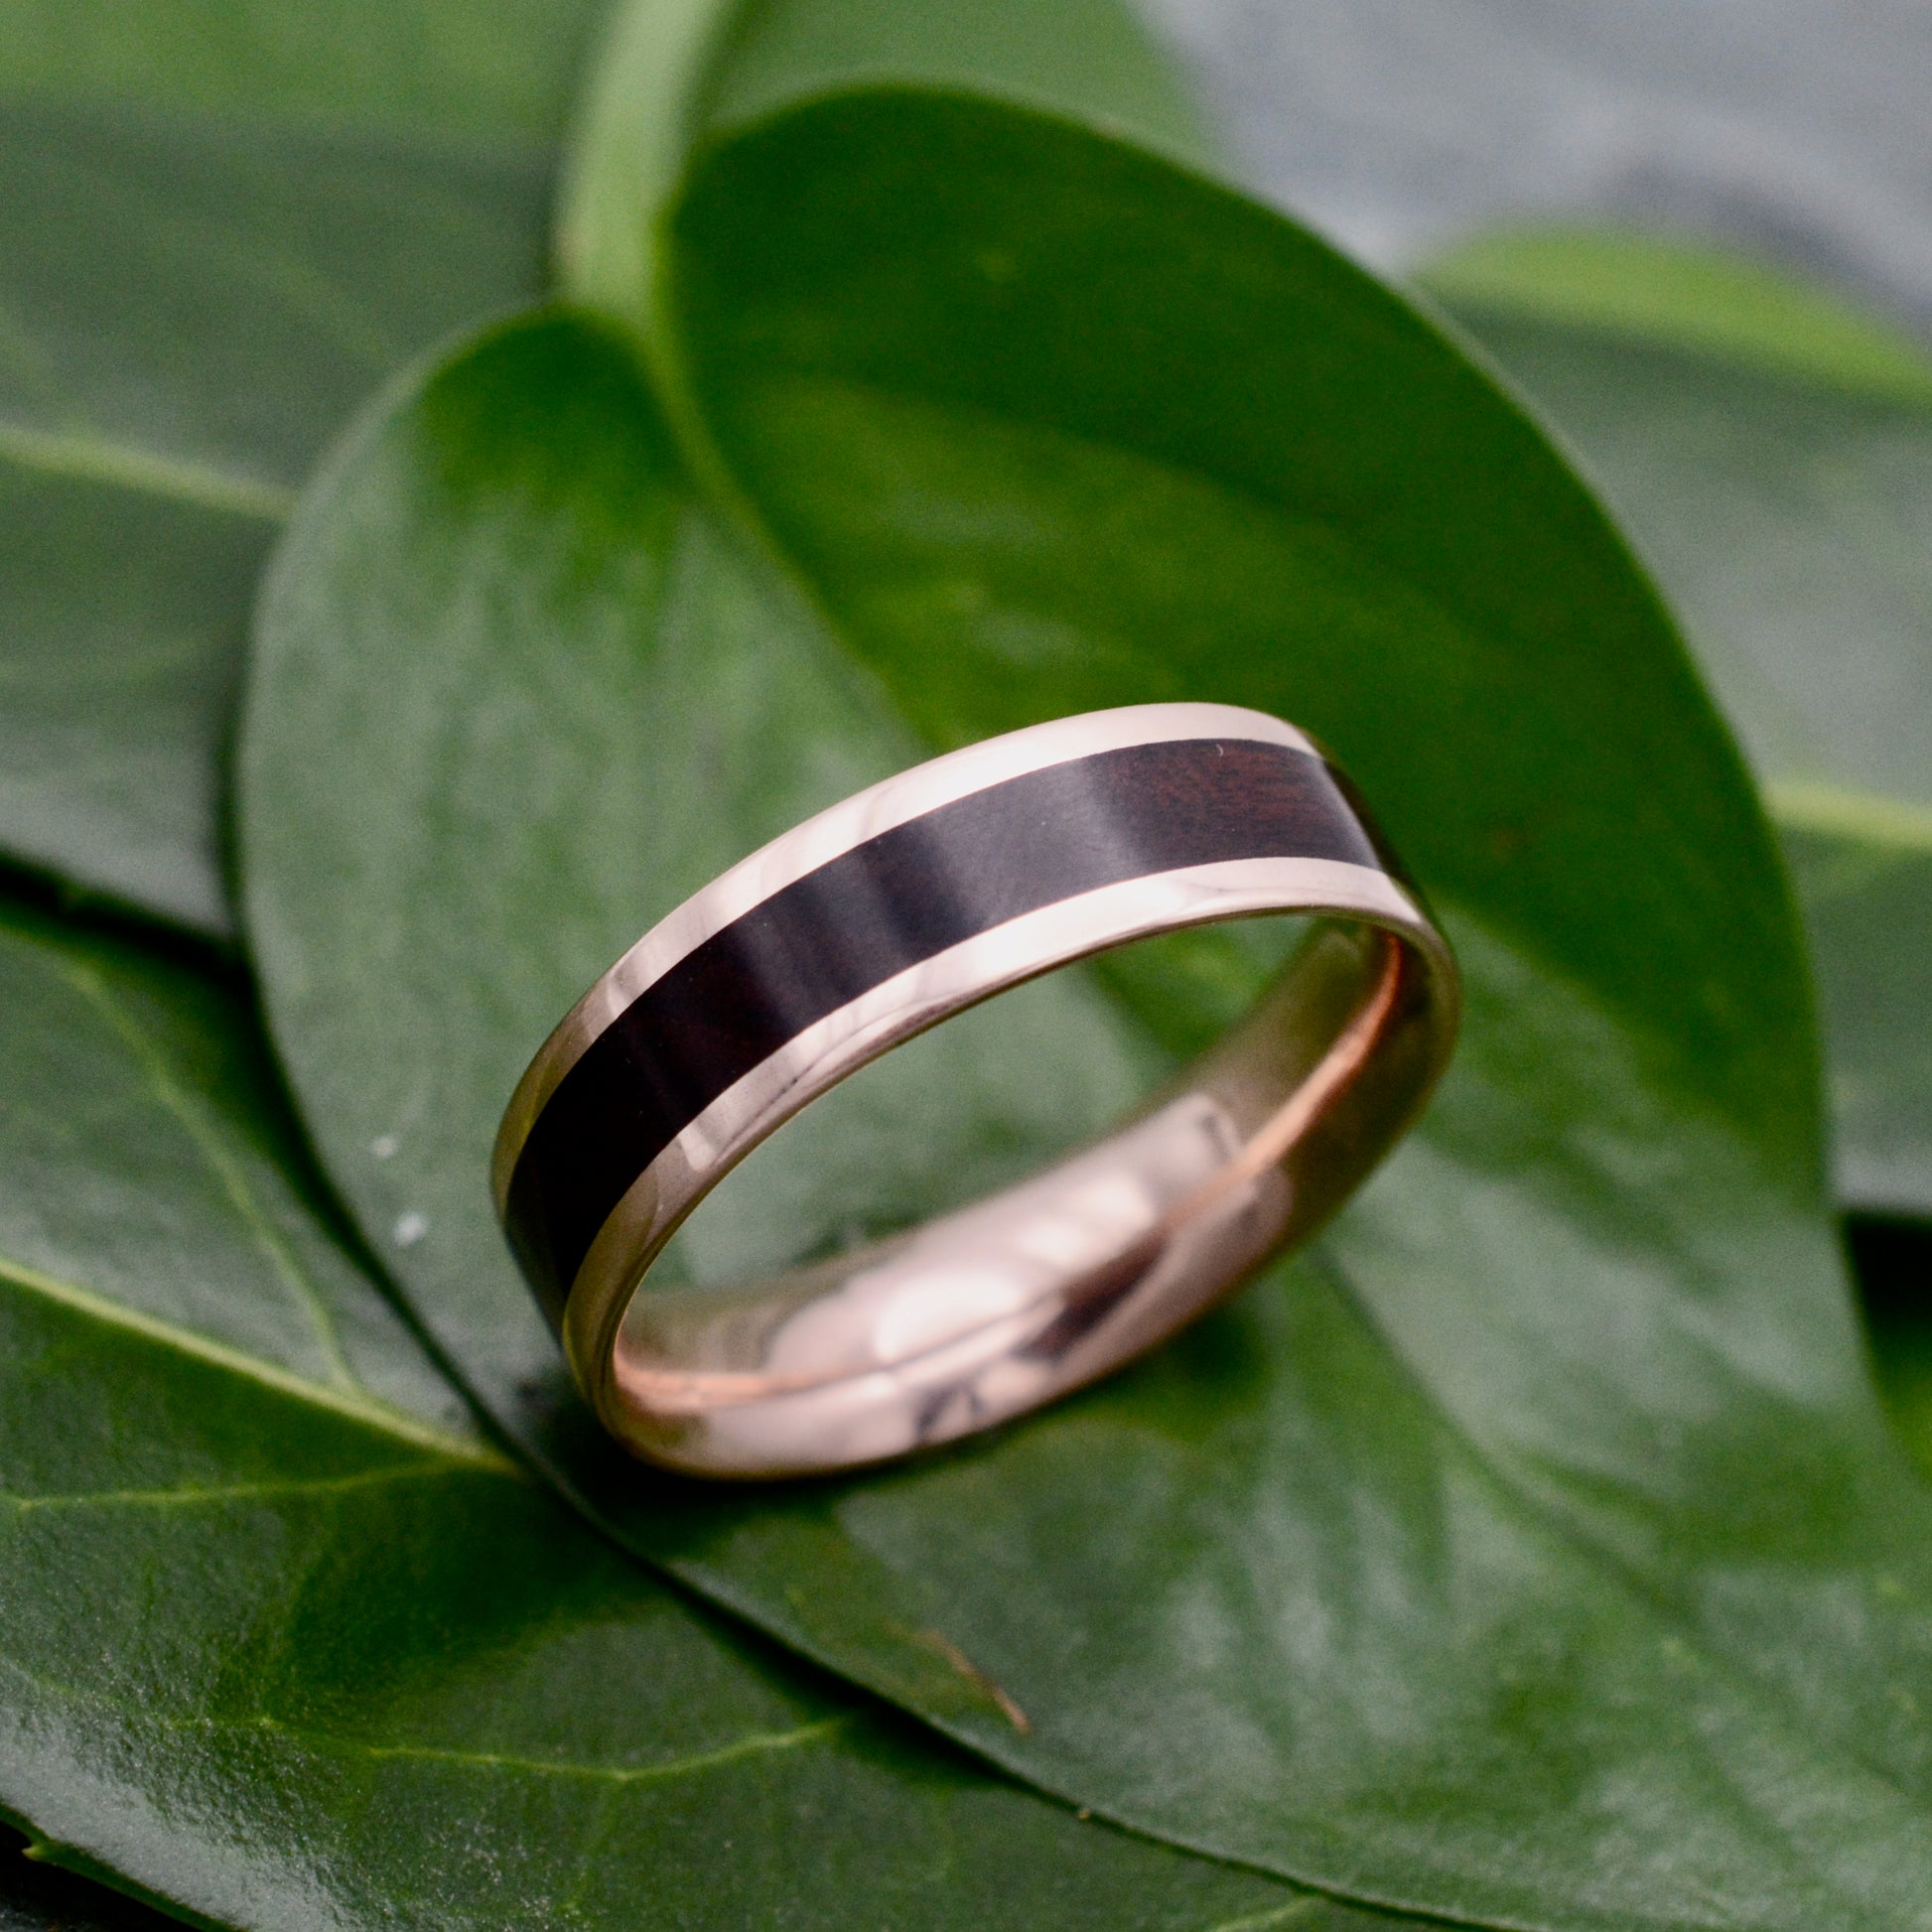 a wedding ring sitting on top of a green leaf